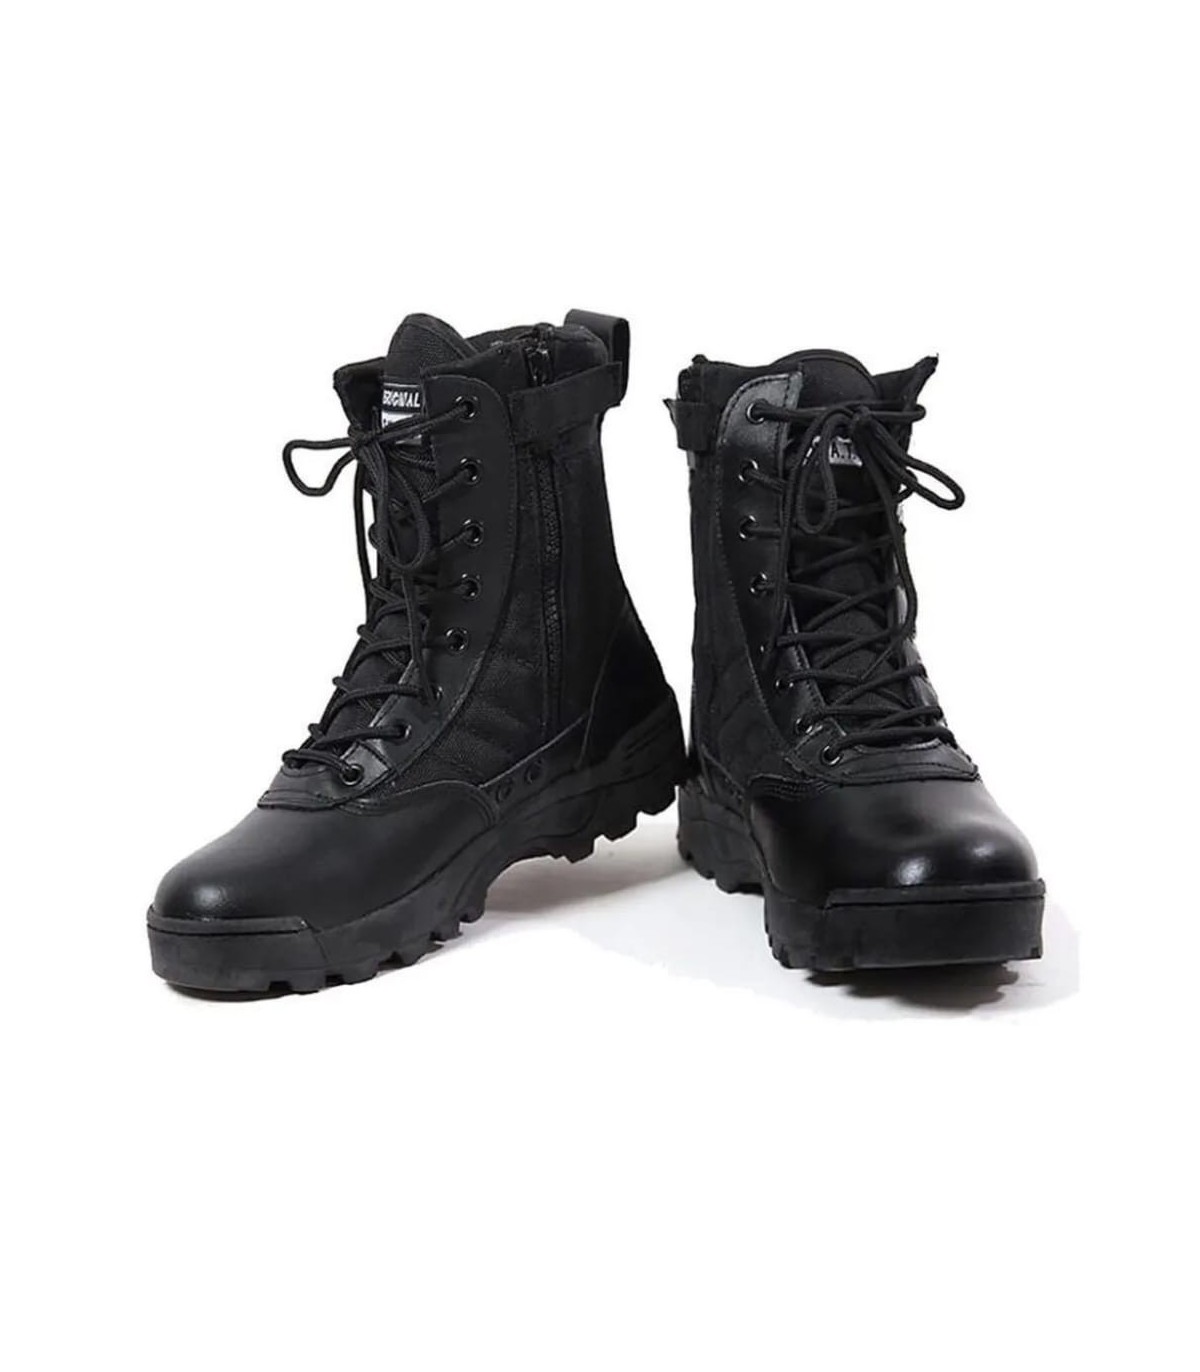 Original SWAT Military Boots - Black